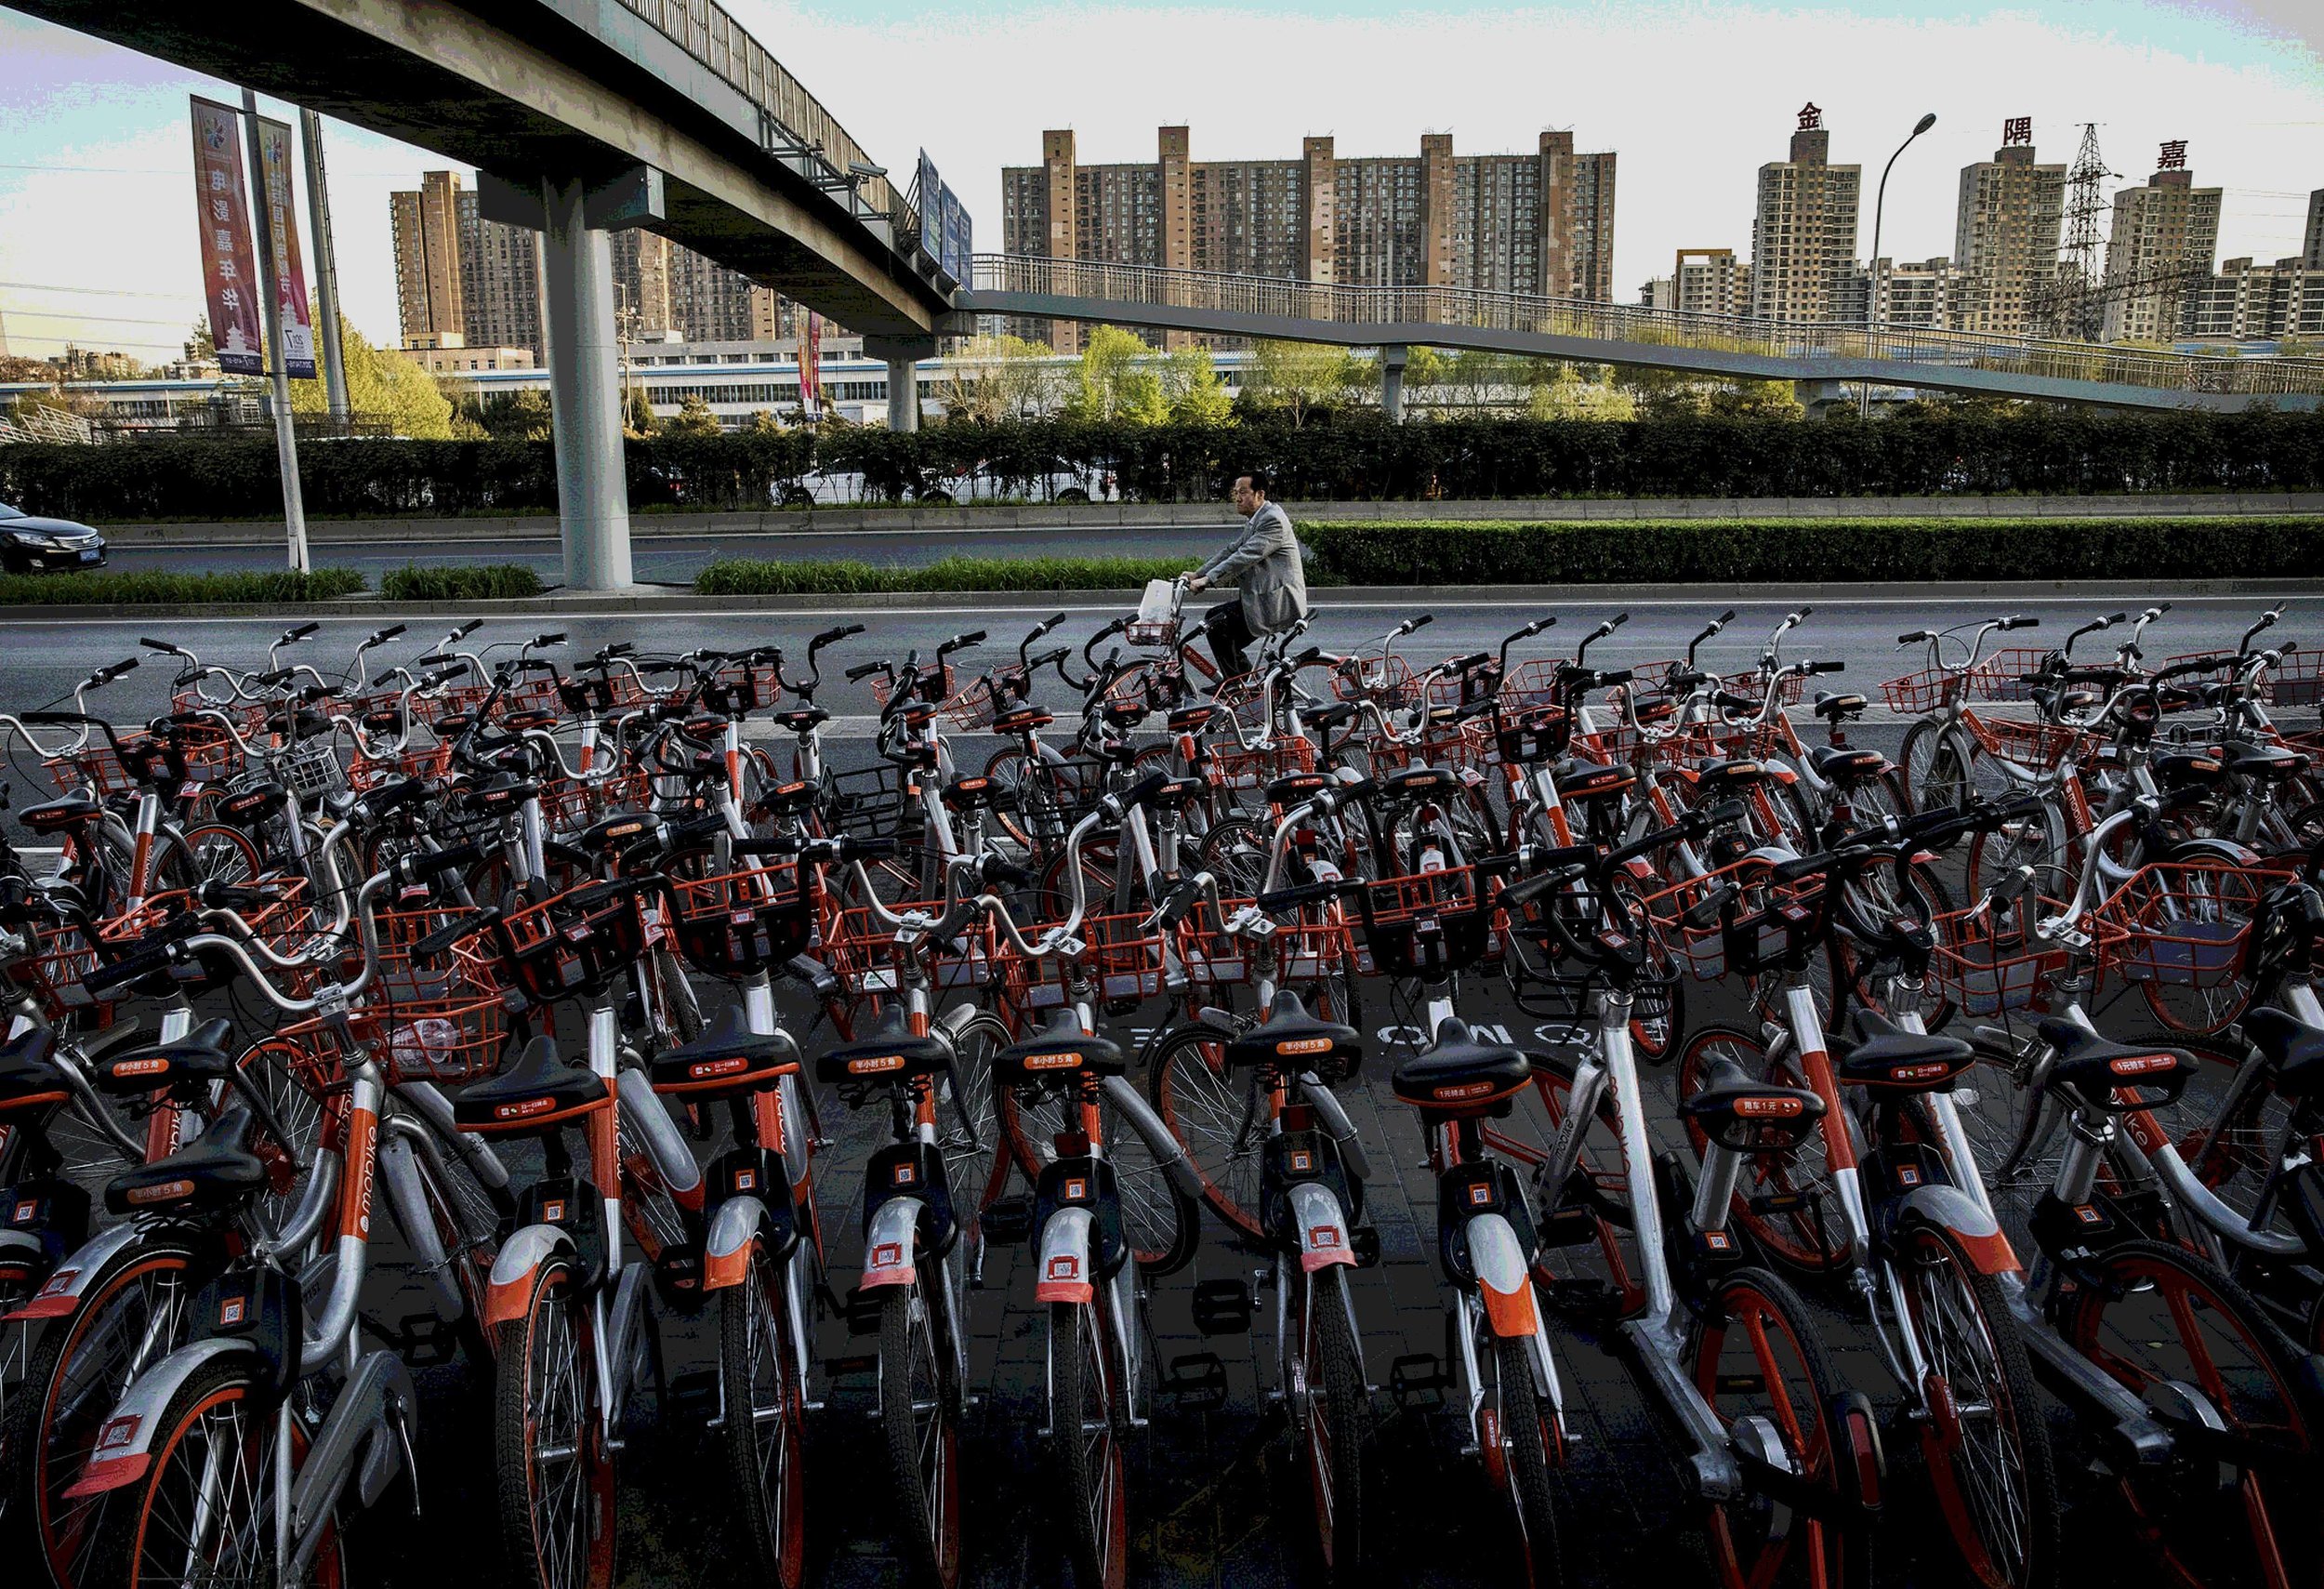 Sharing Bike Beijing. Access over